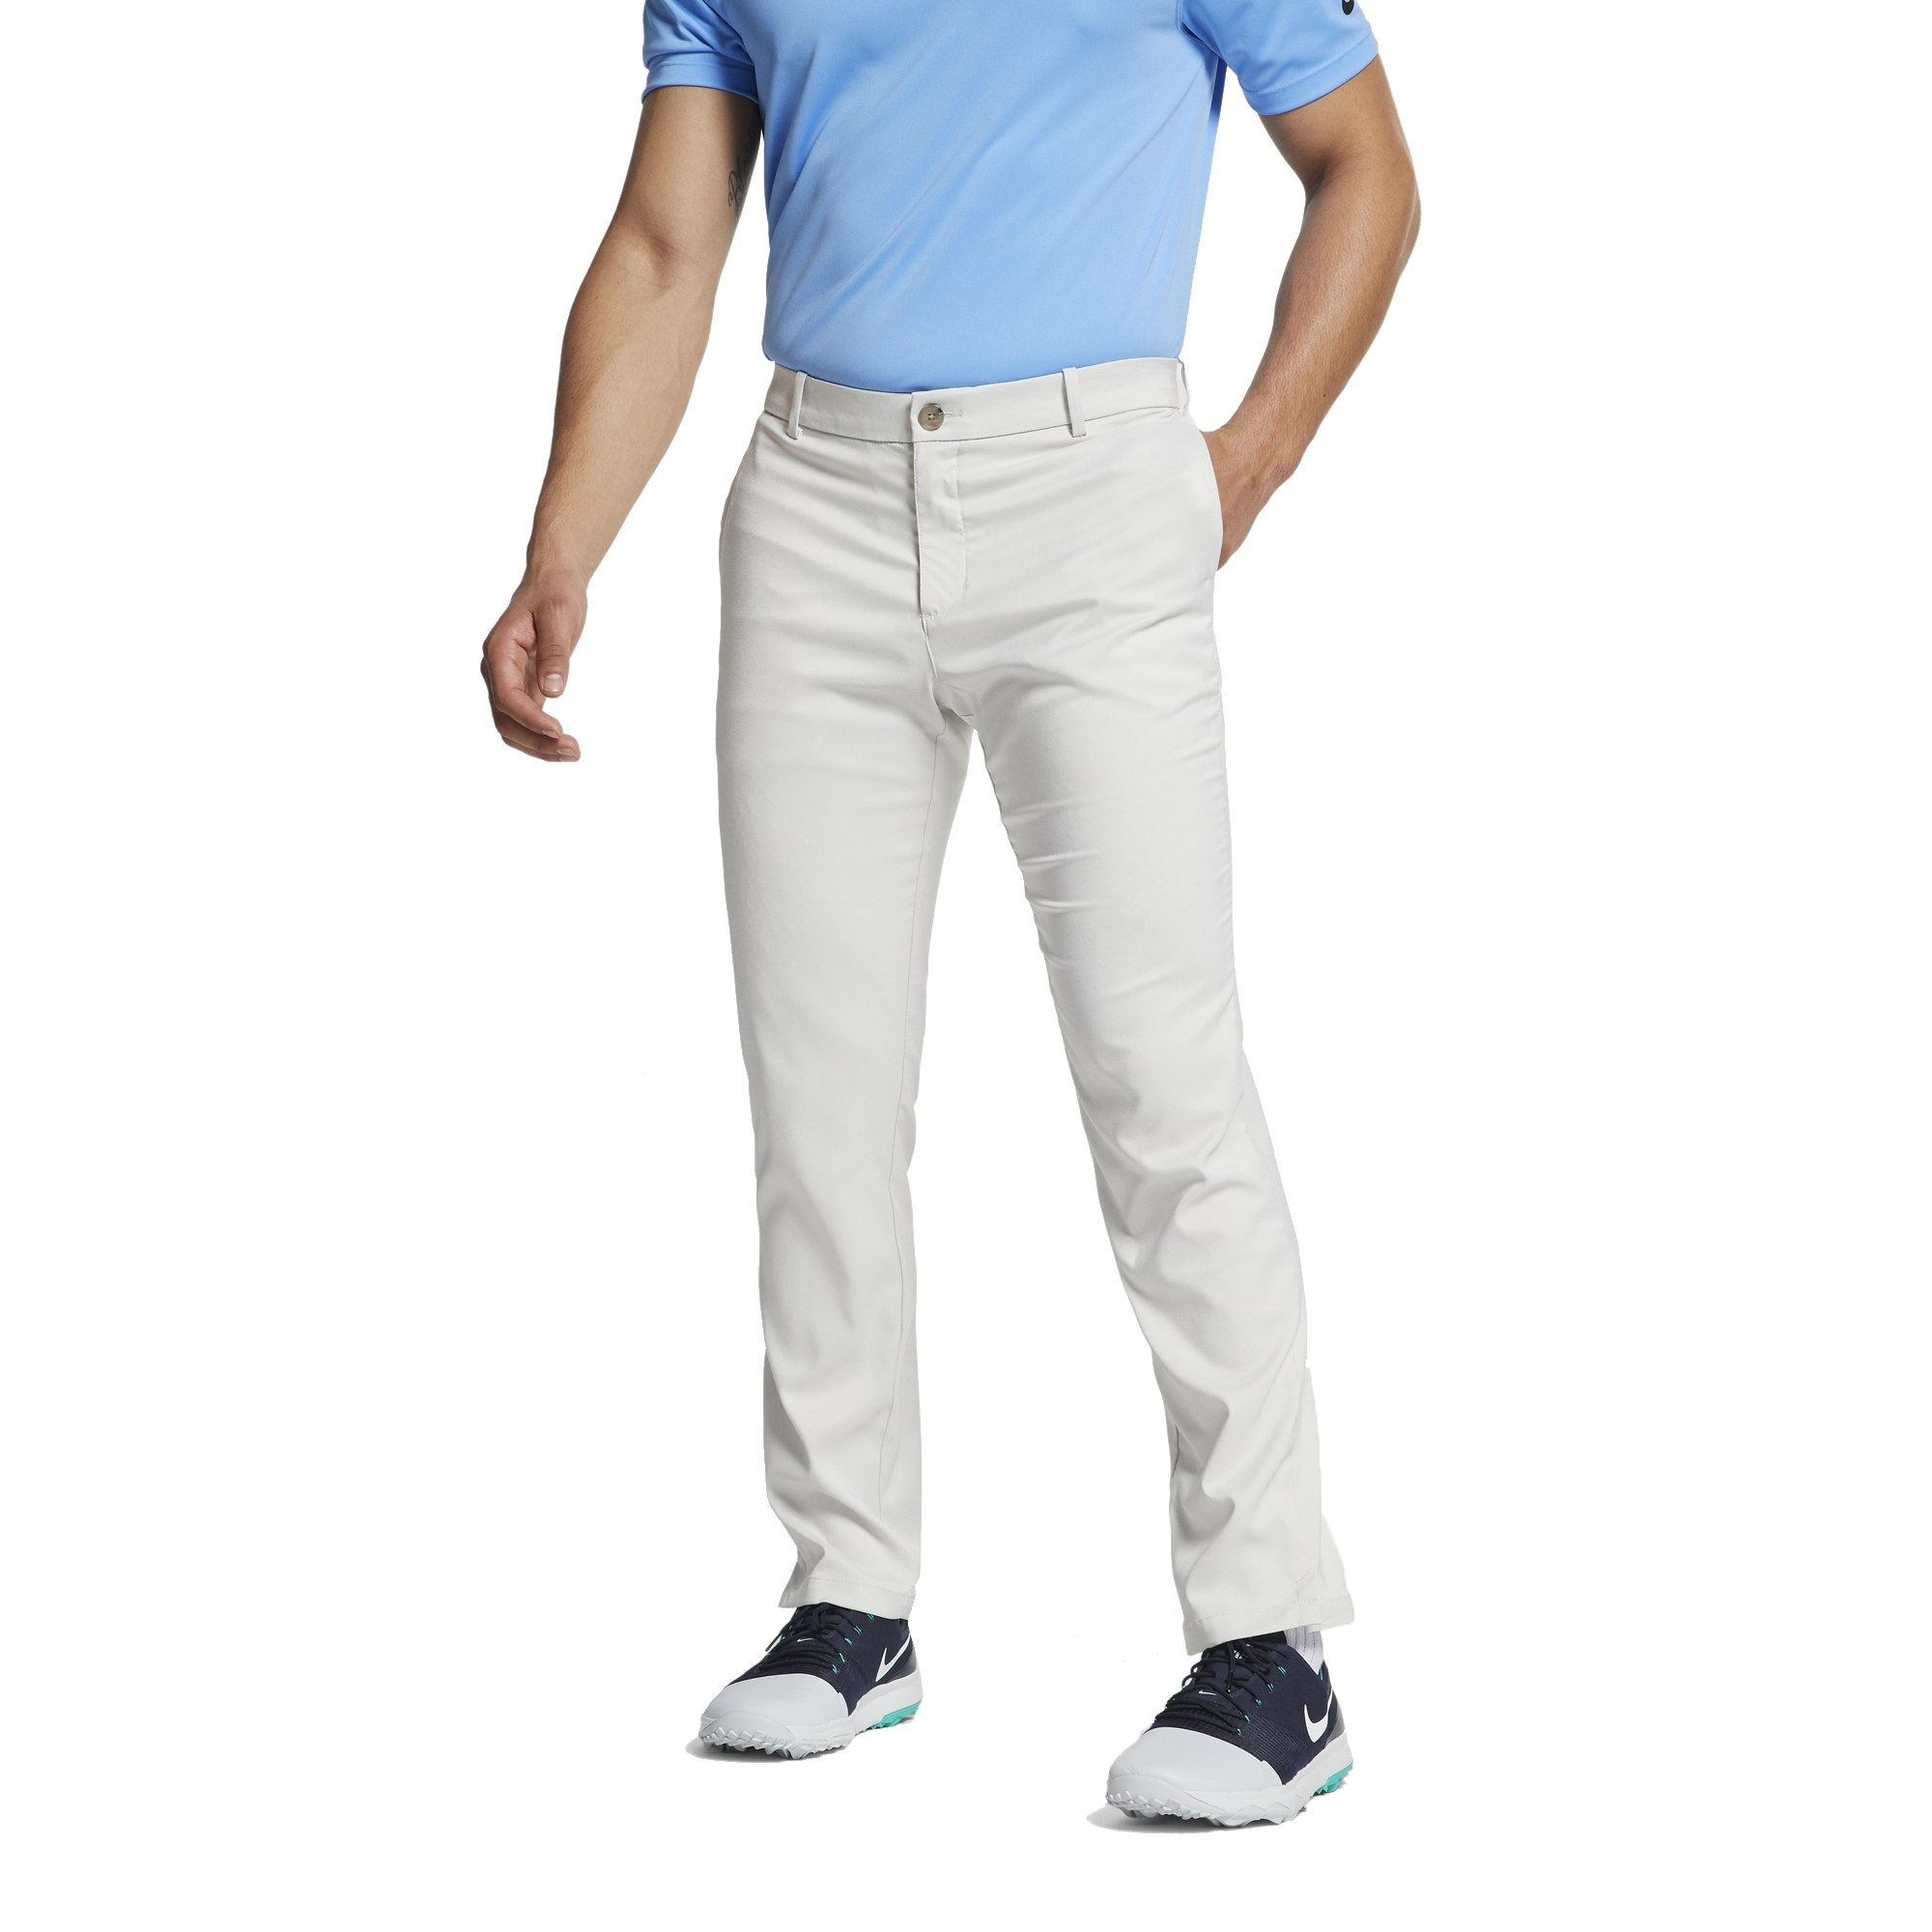 nike hybrid flex golf pants